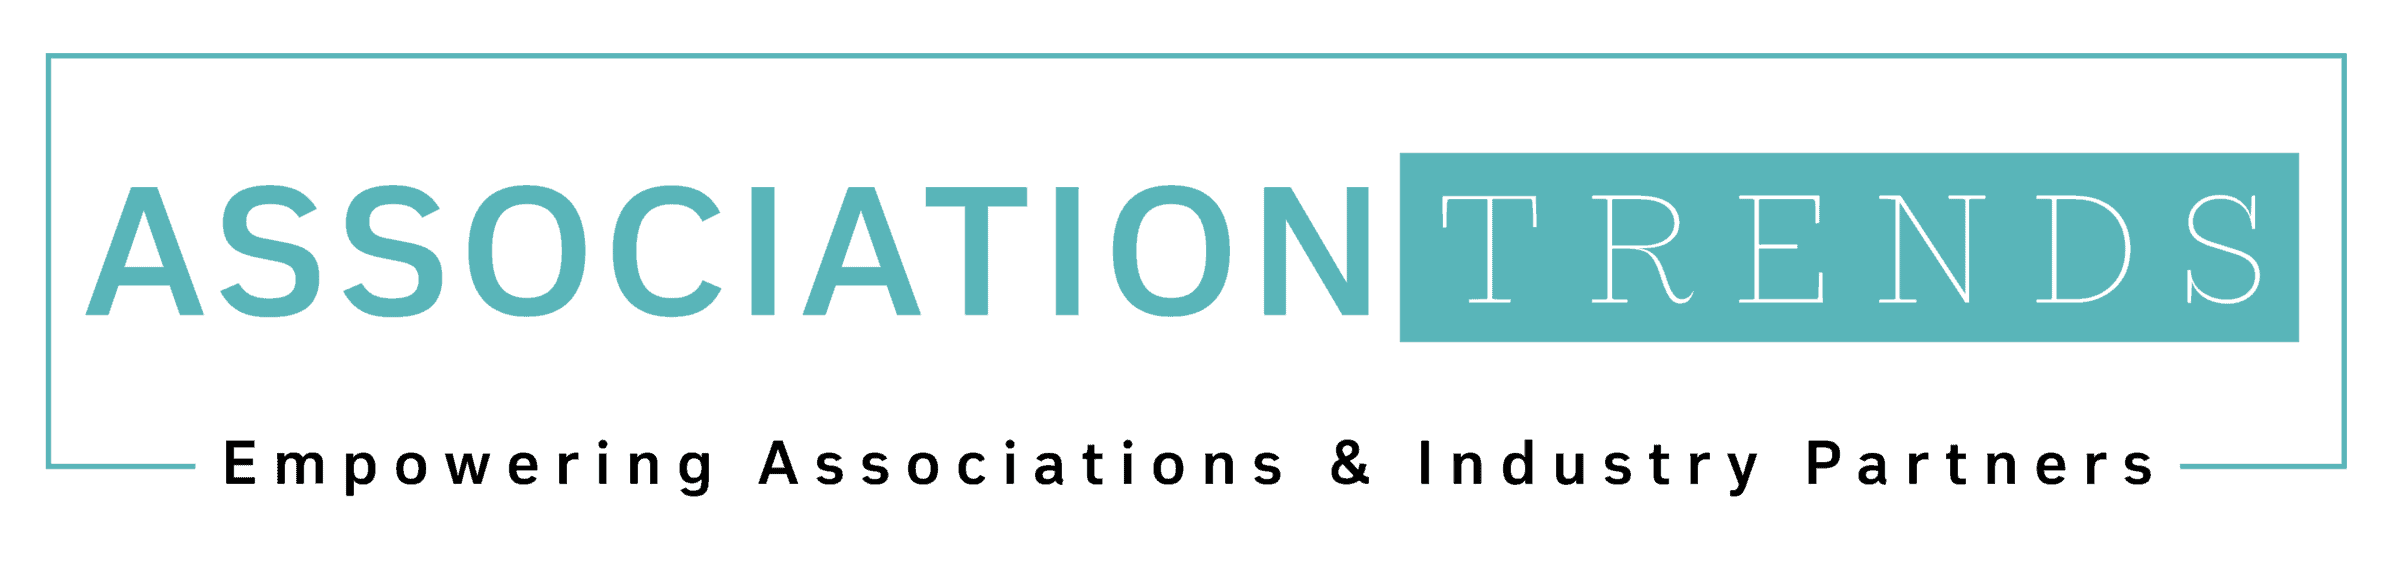 association-trends-logo-color